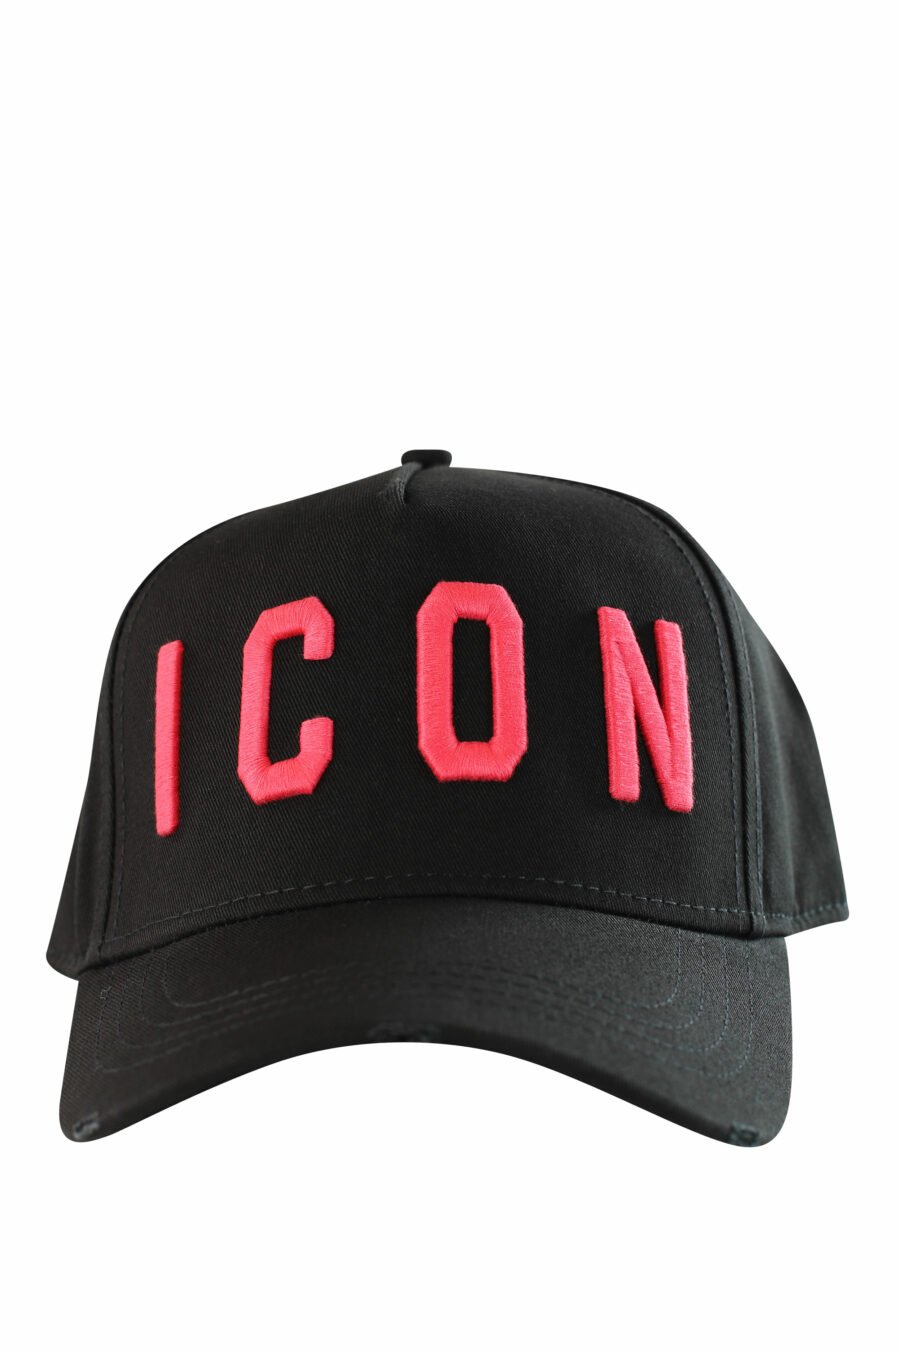 Black cap with embroidered fuchsia "icon" logo - IMG 1213